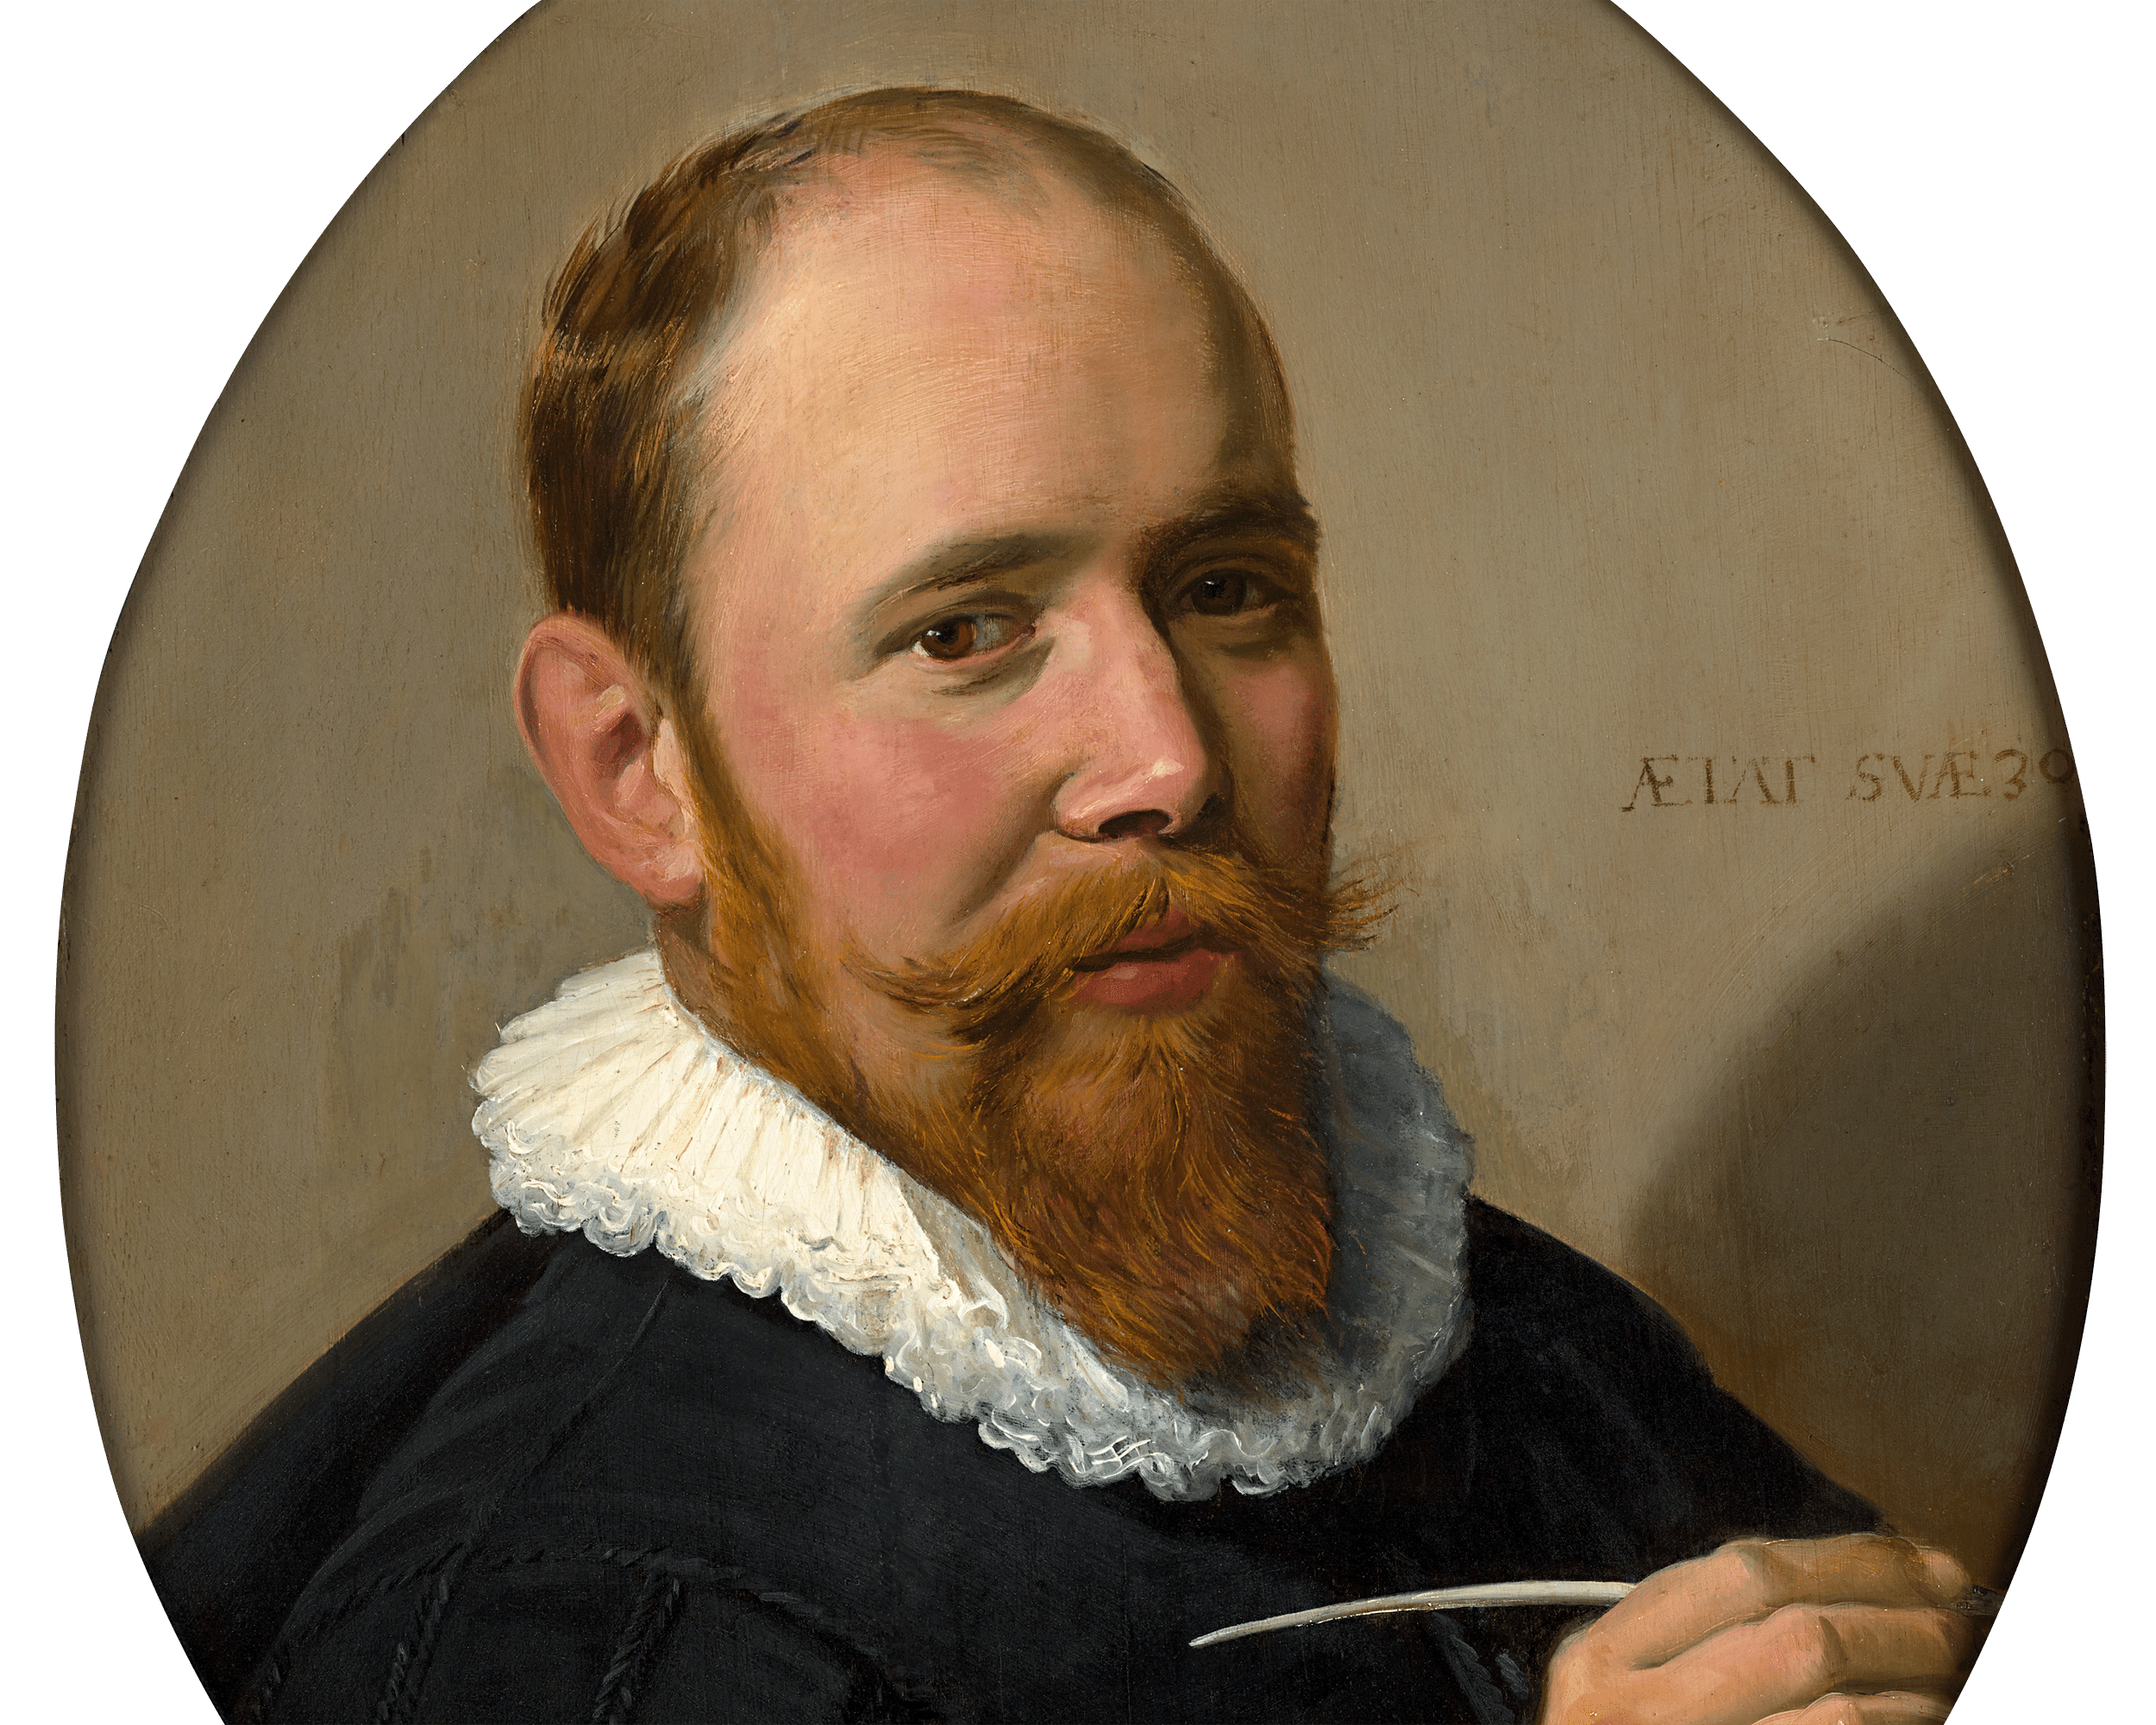 Portrait of a Gentleman by Frans Hals